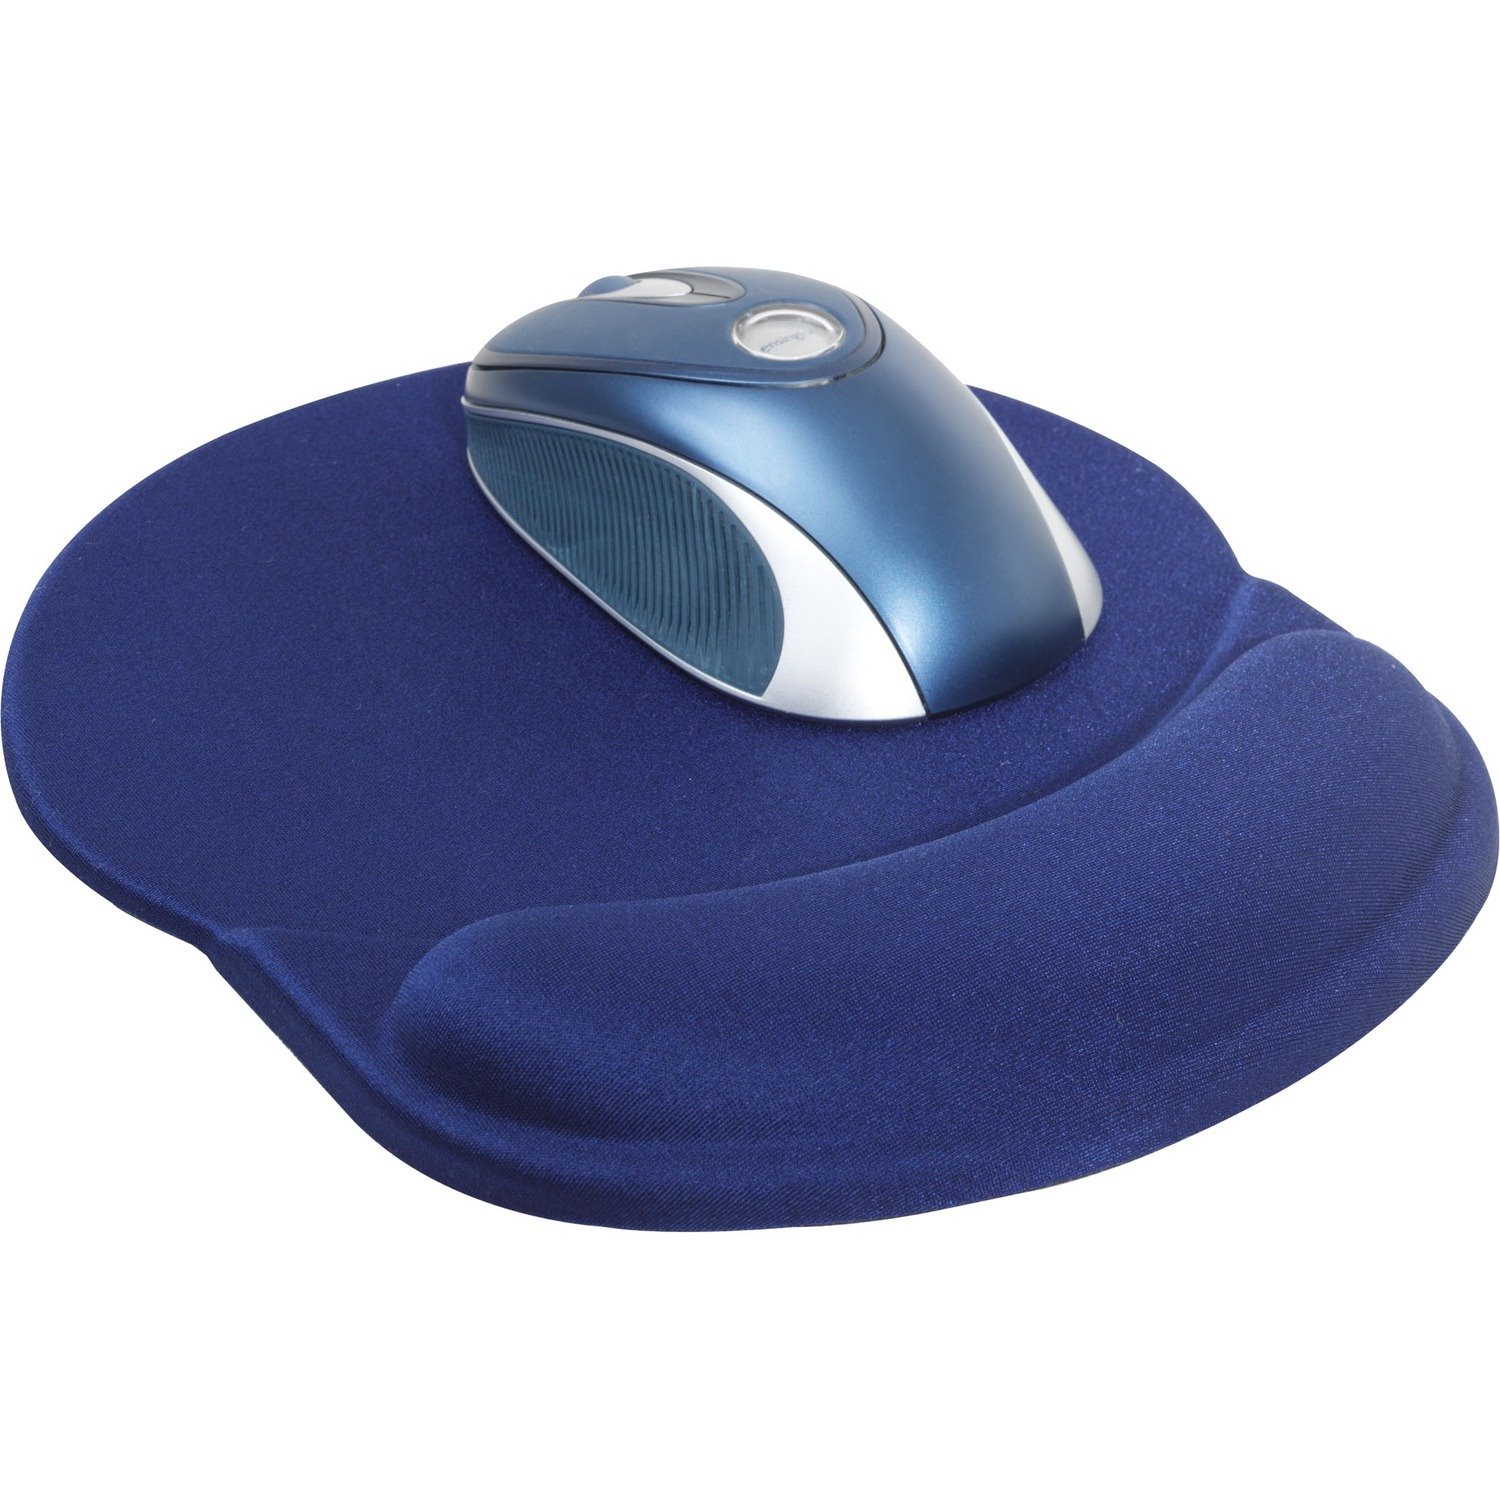 DAC MP123 Super Gel Mouse Pad Contoured Blue